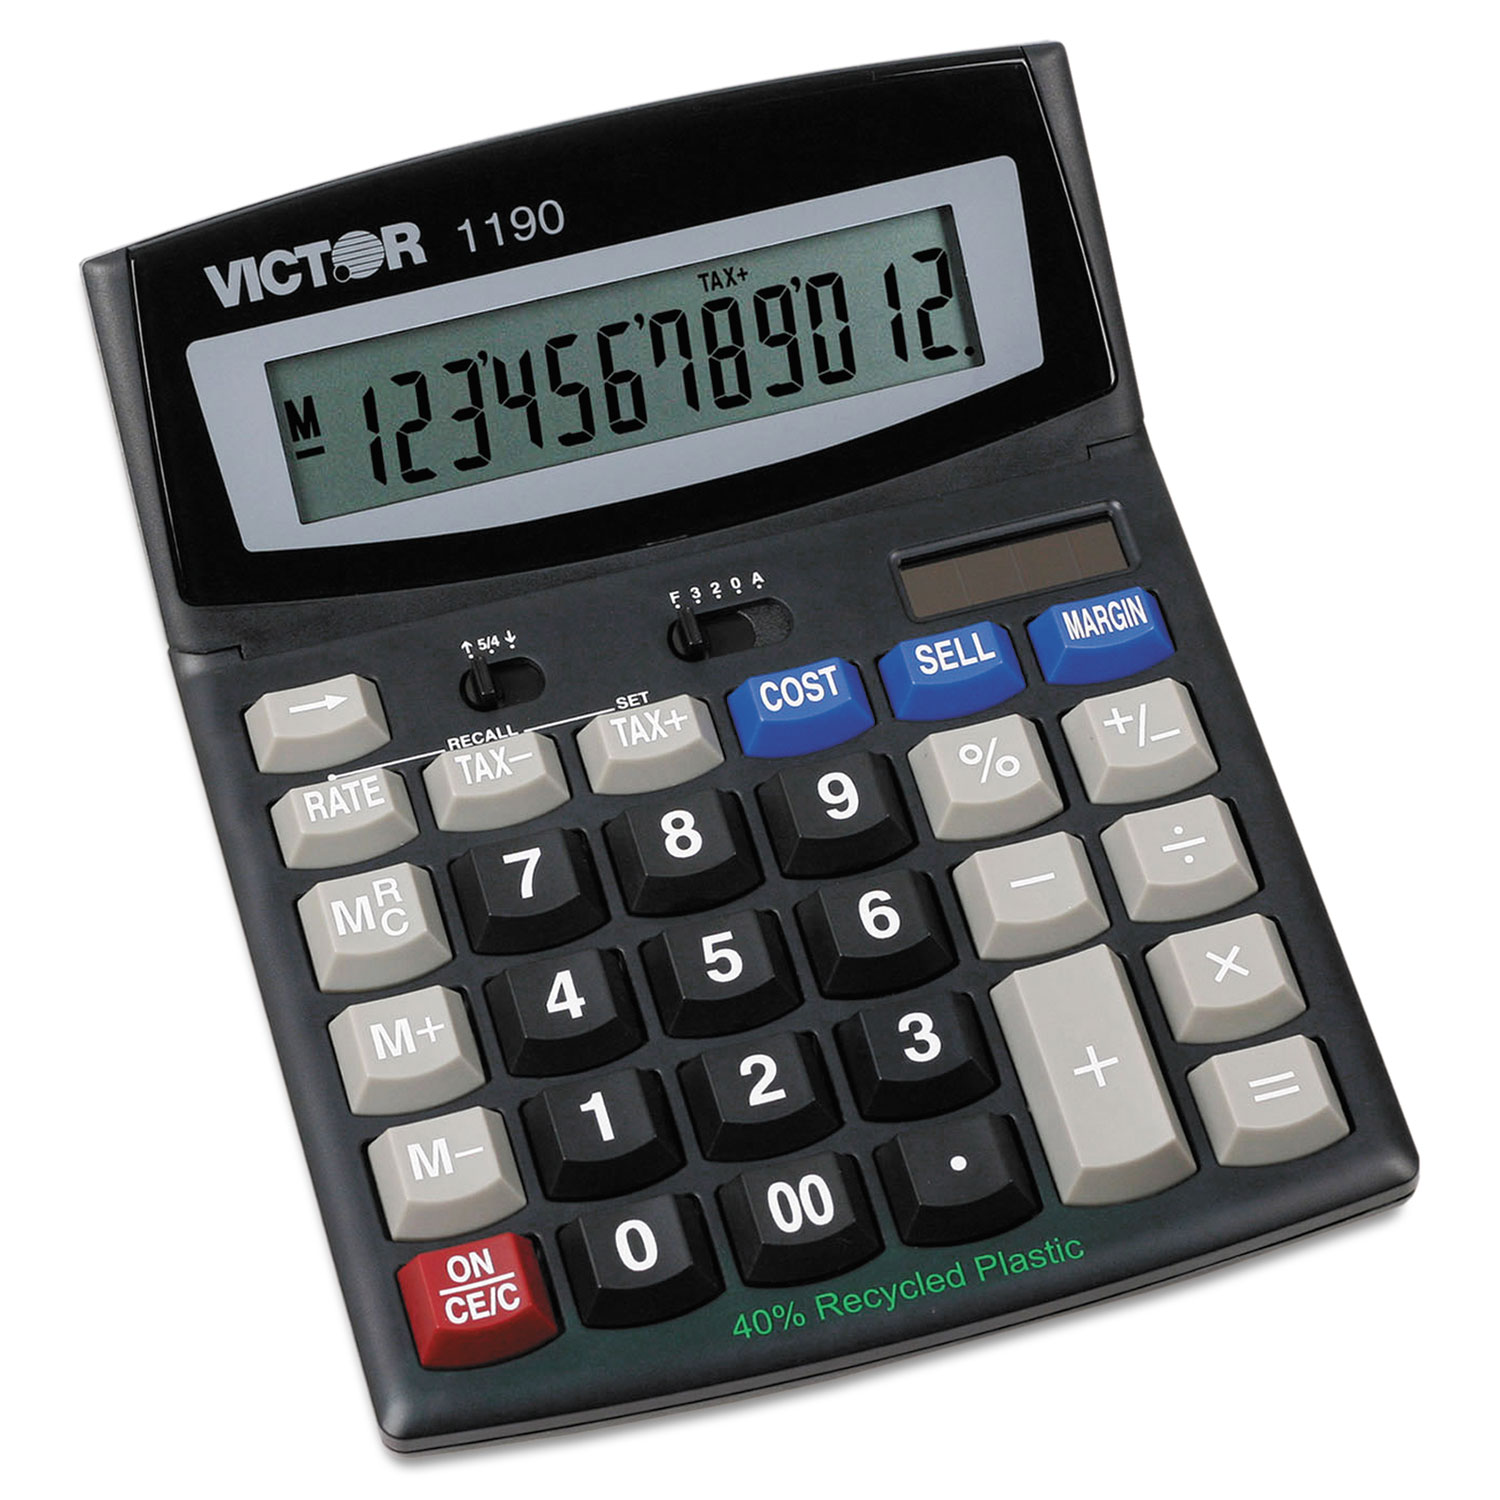  Victor 1190 1190 Executive Desktop Calculator, 12-Digit LCD (VCT1190) 